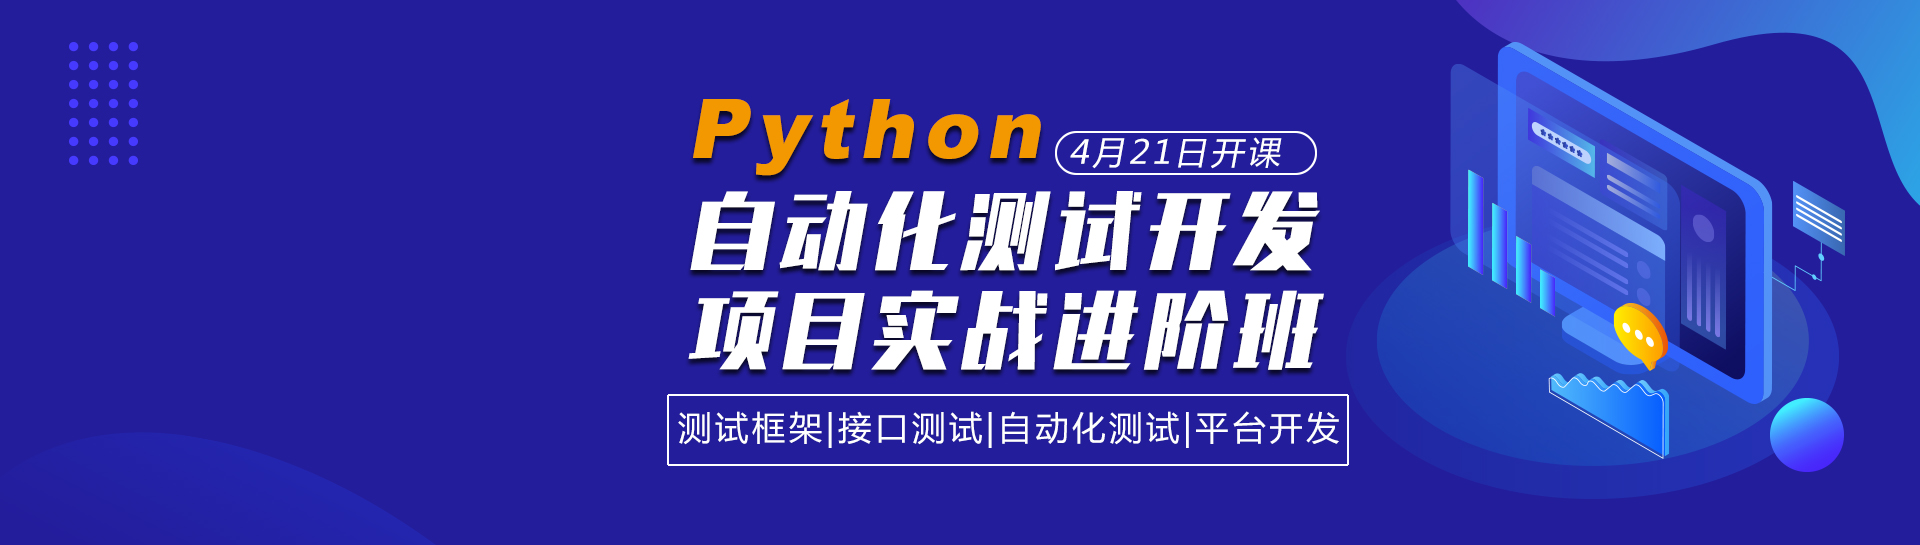 python测试开发培训